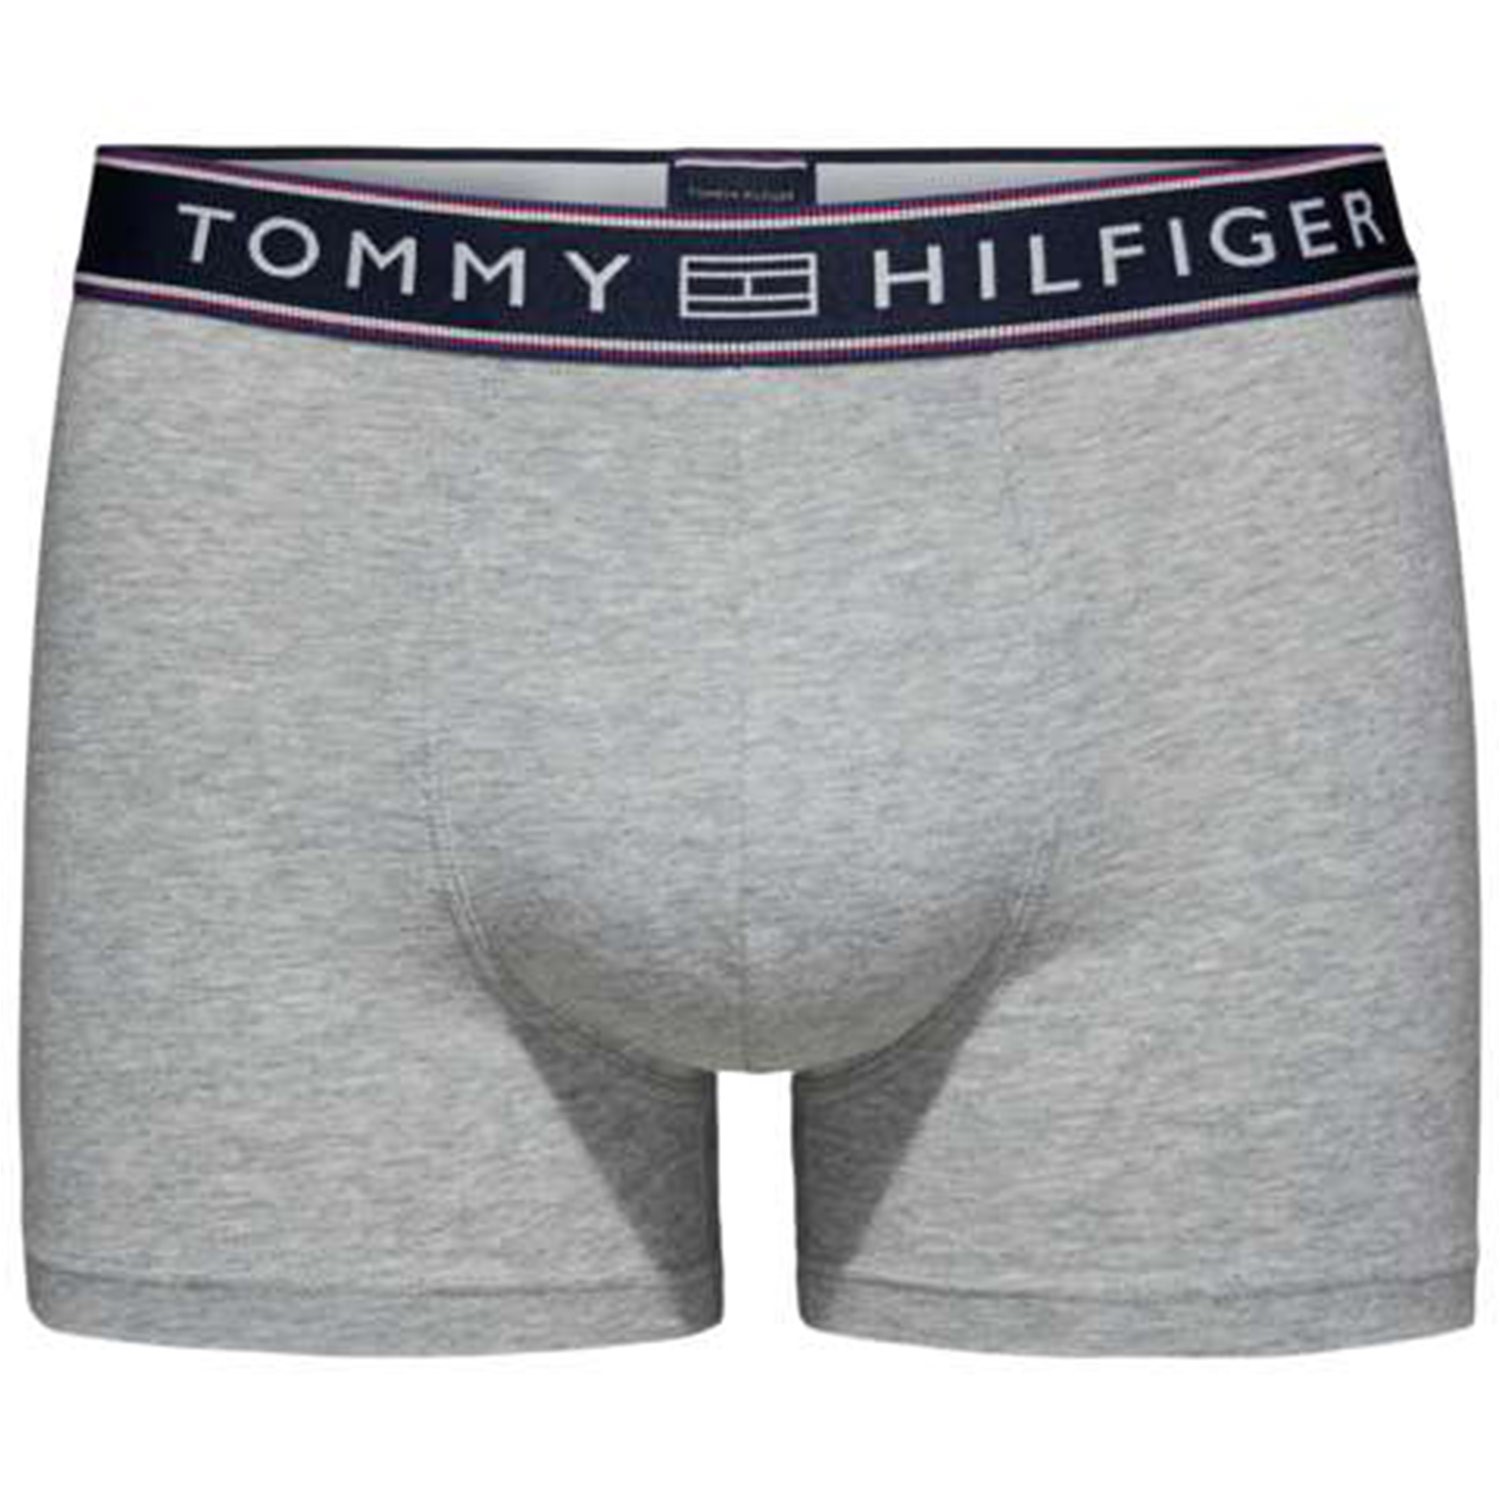 Tommy Hilfiger Stripe Cotton Trunk